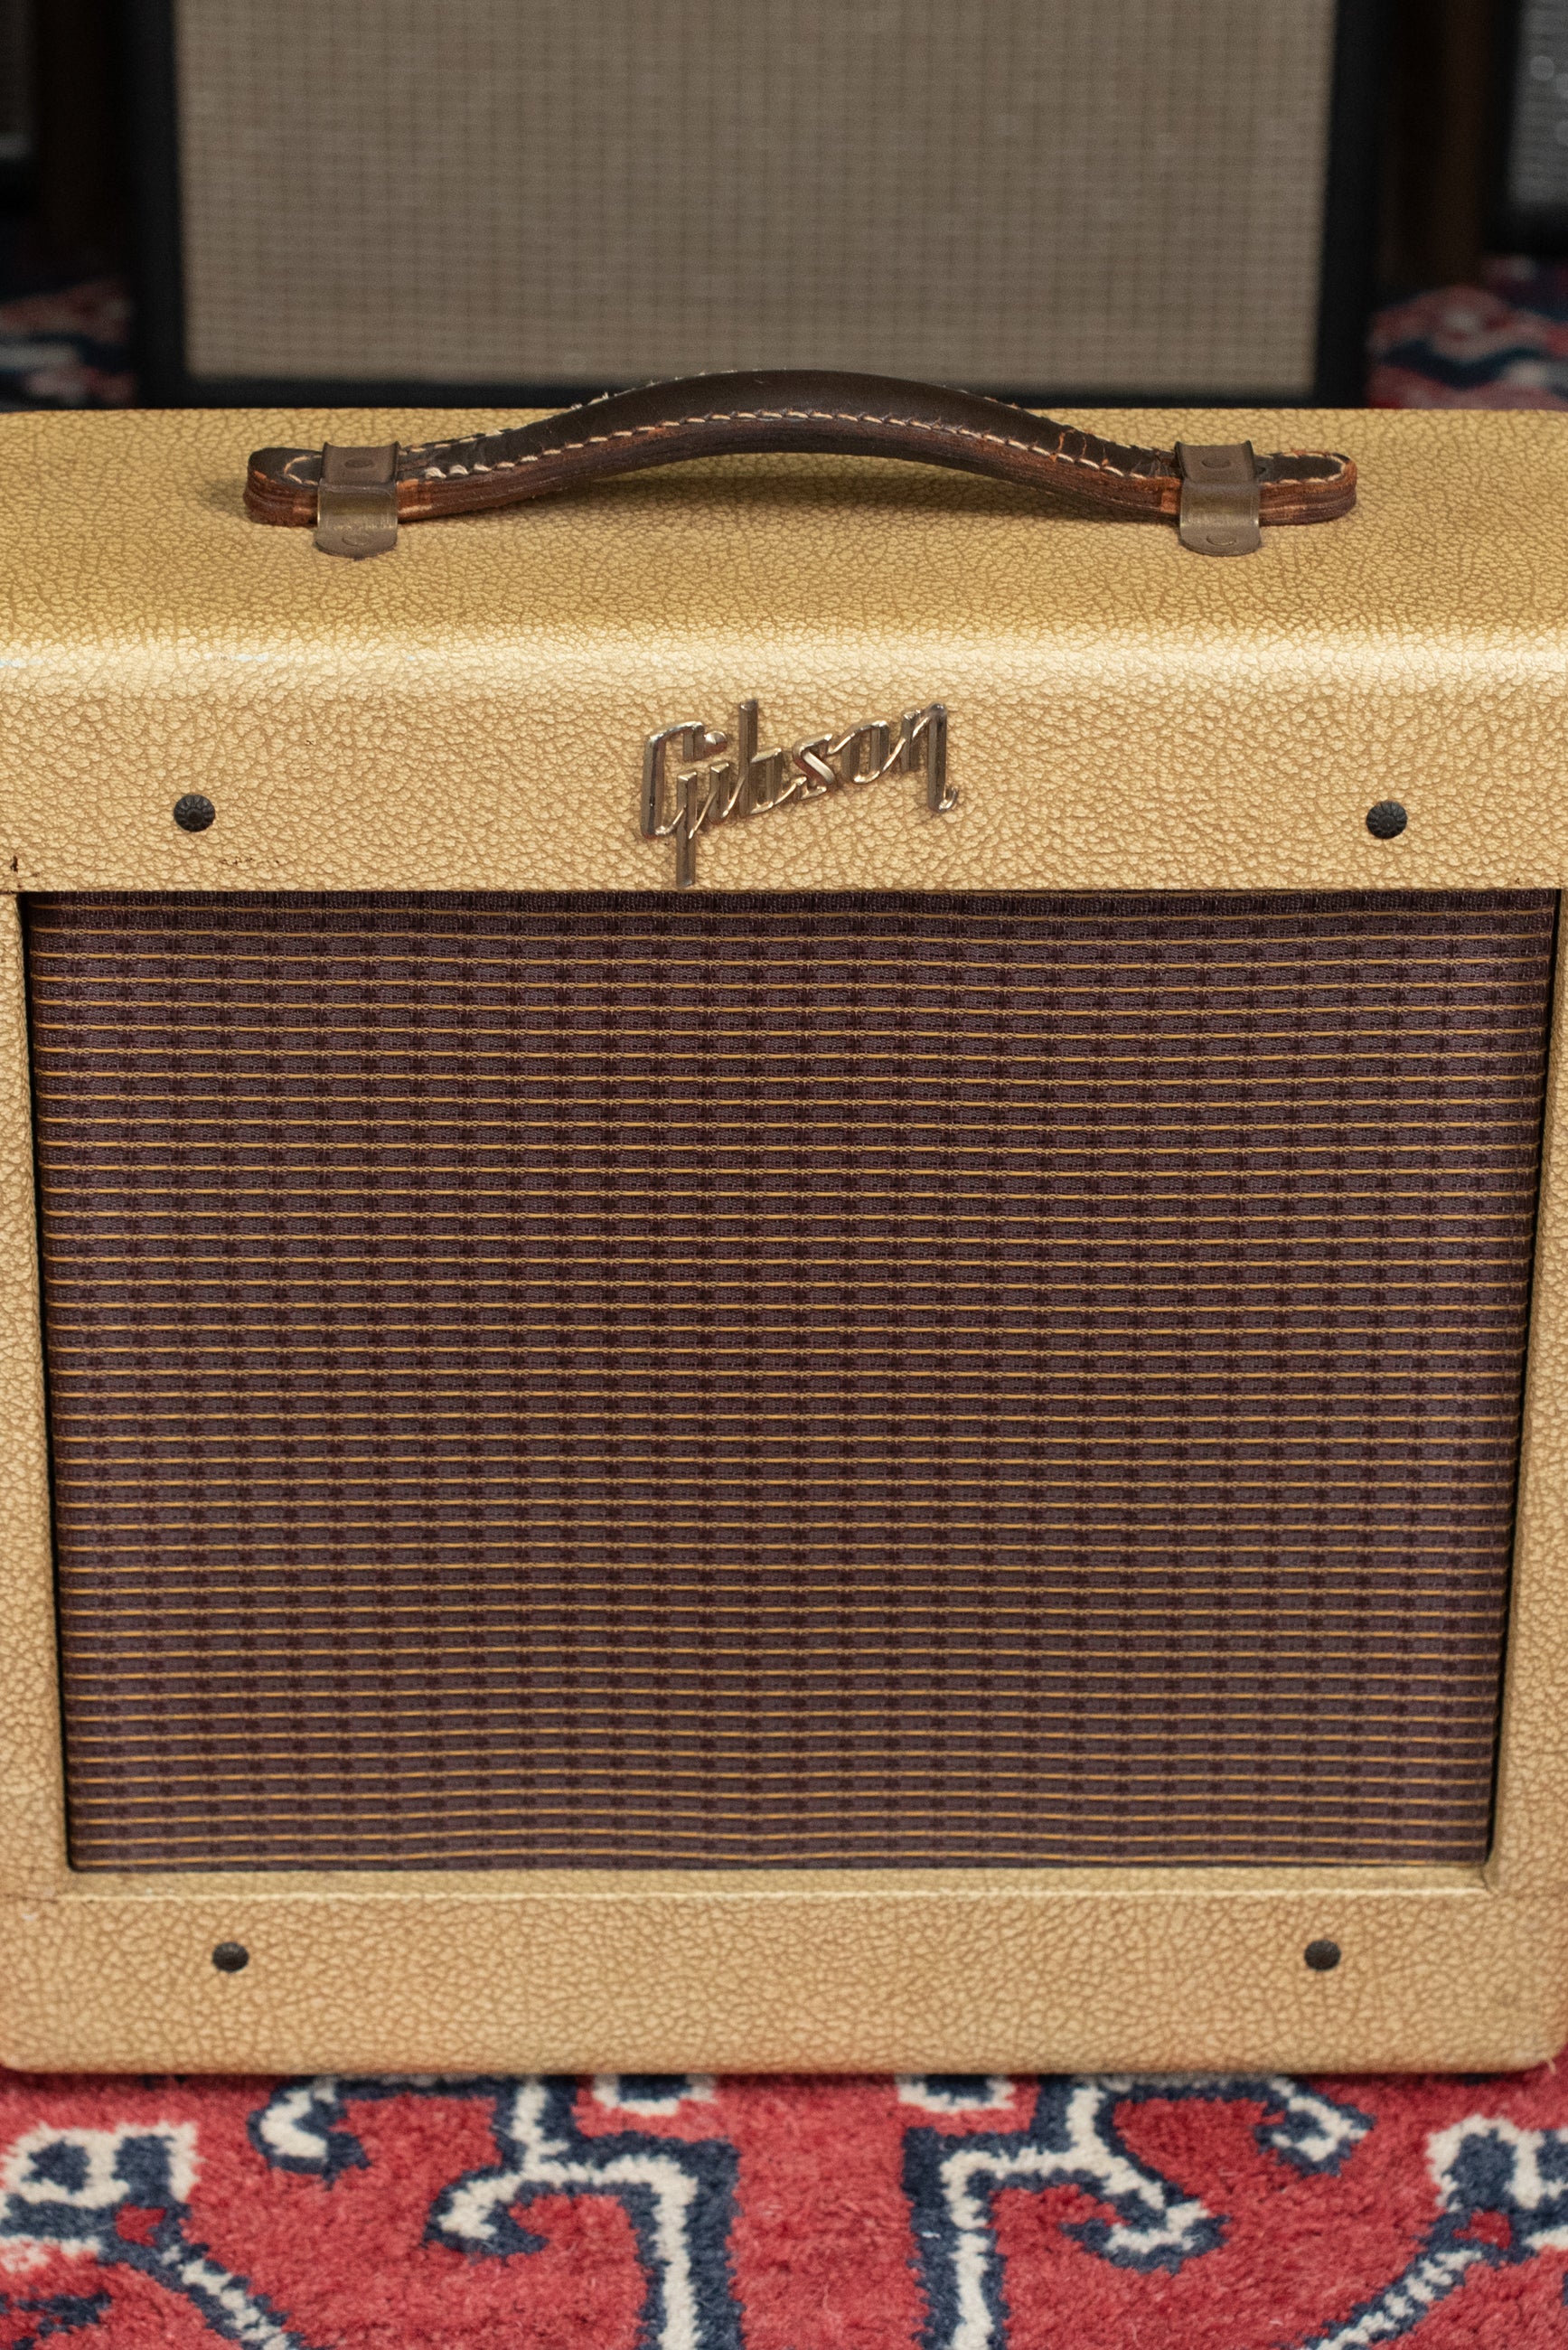 Vintage 1957 Gibson Amplifier